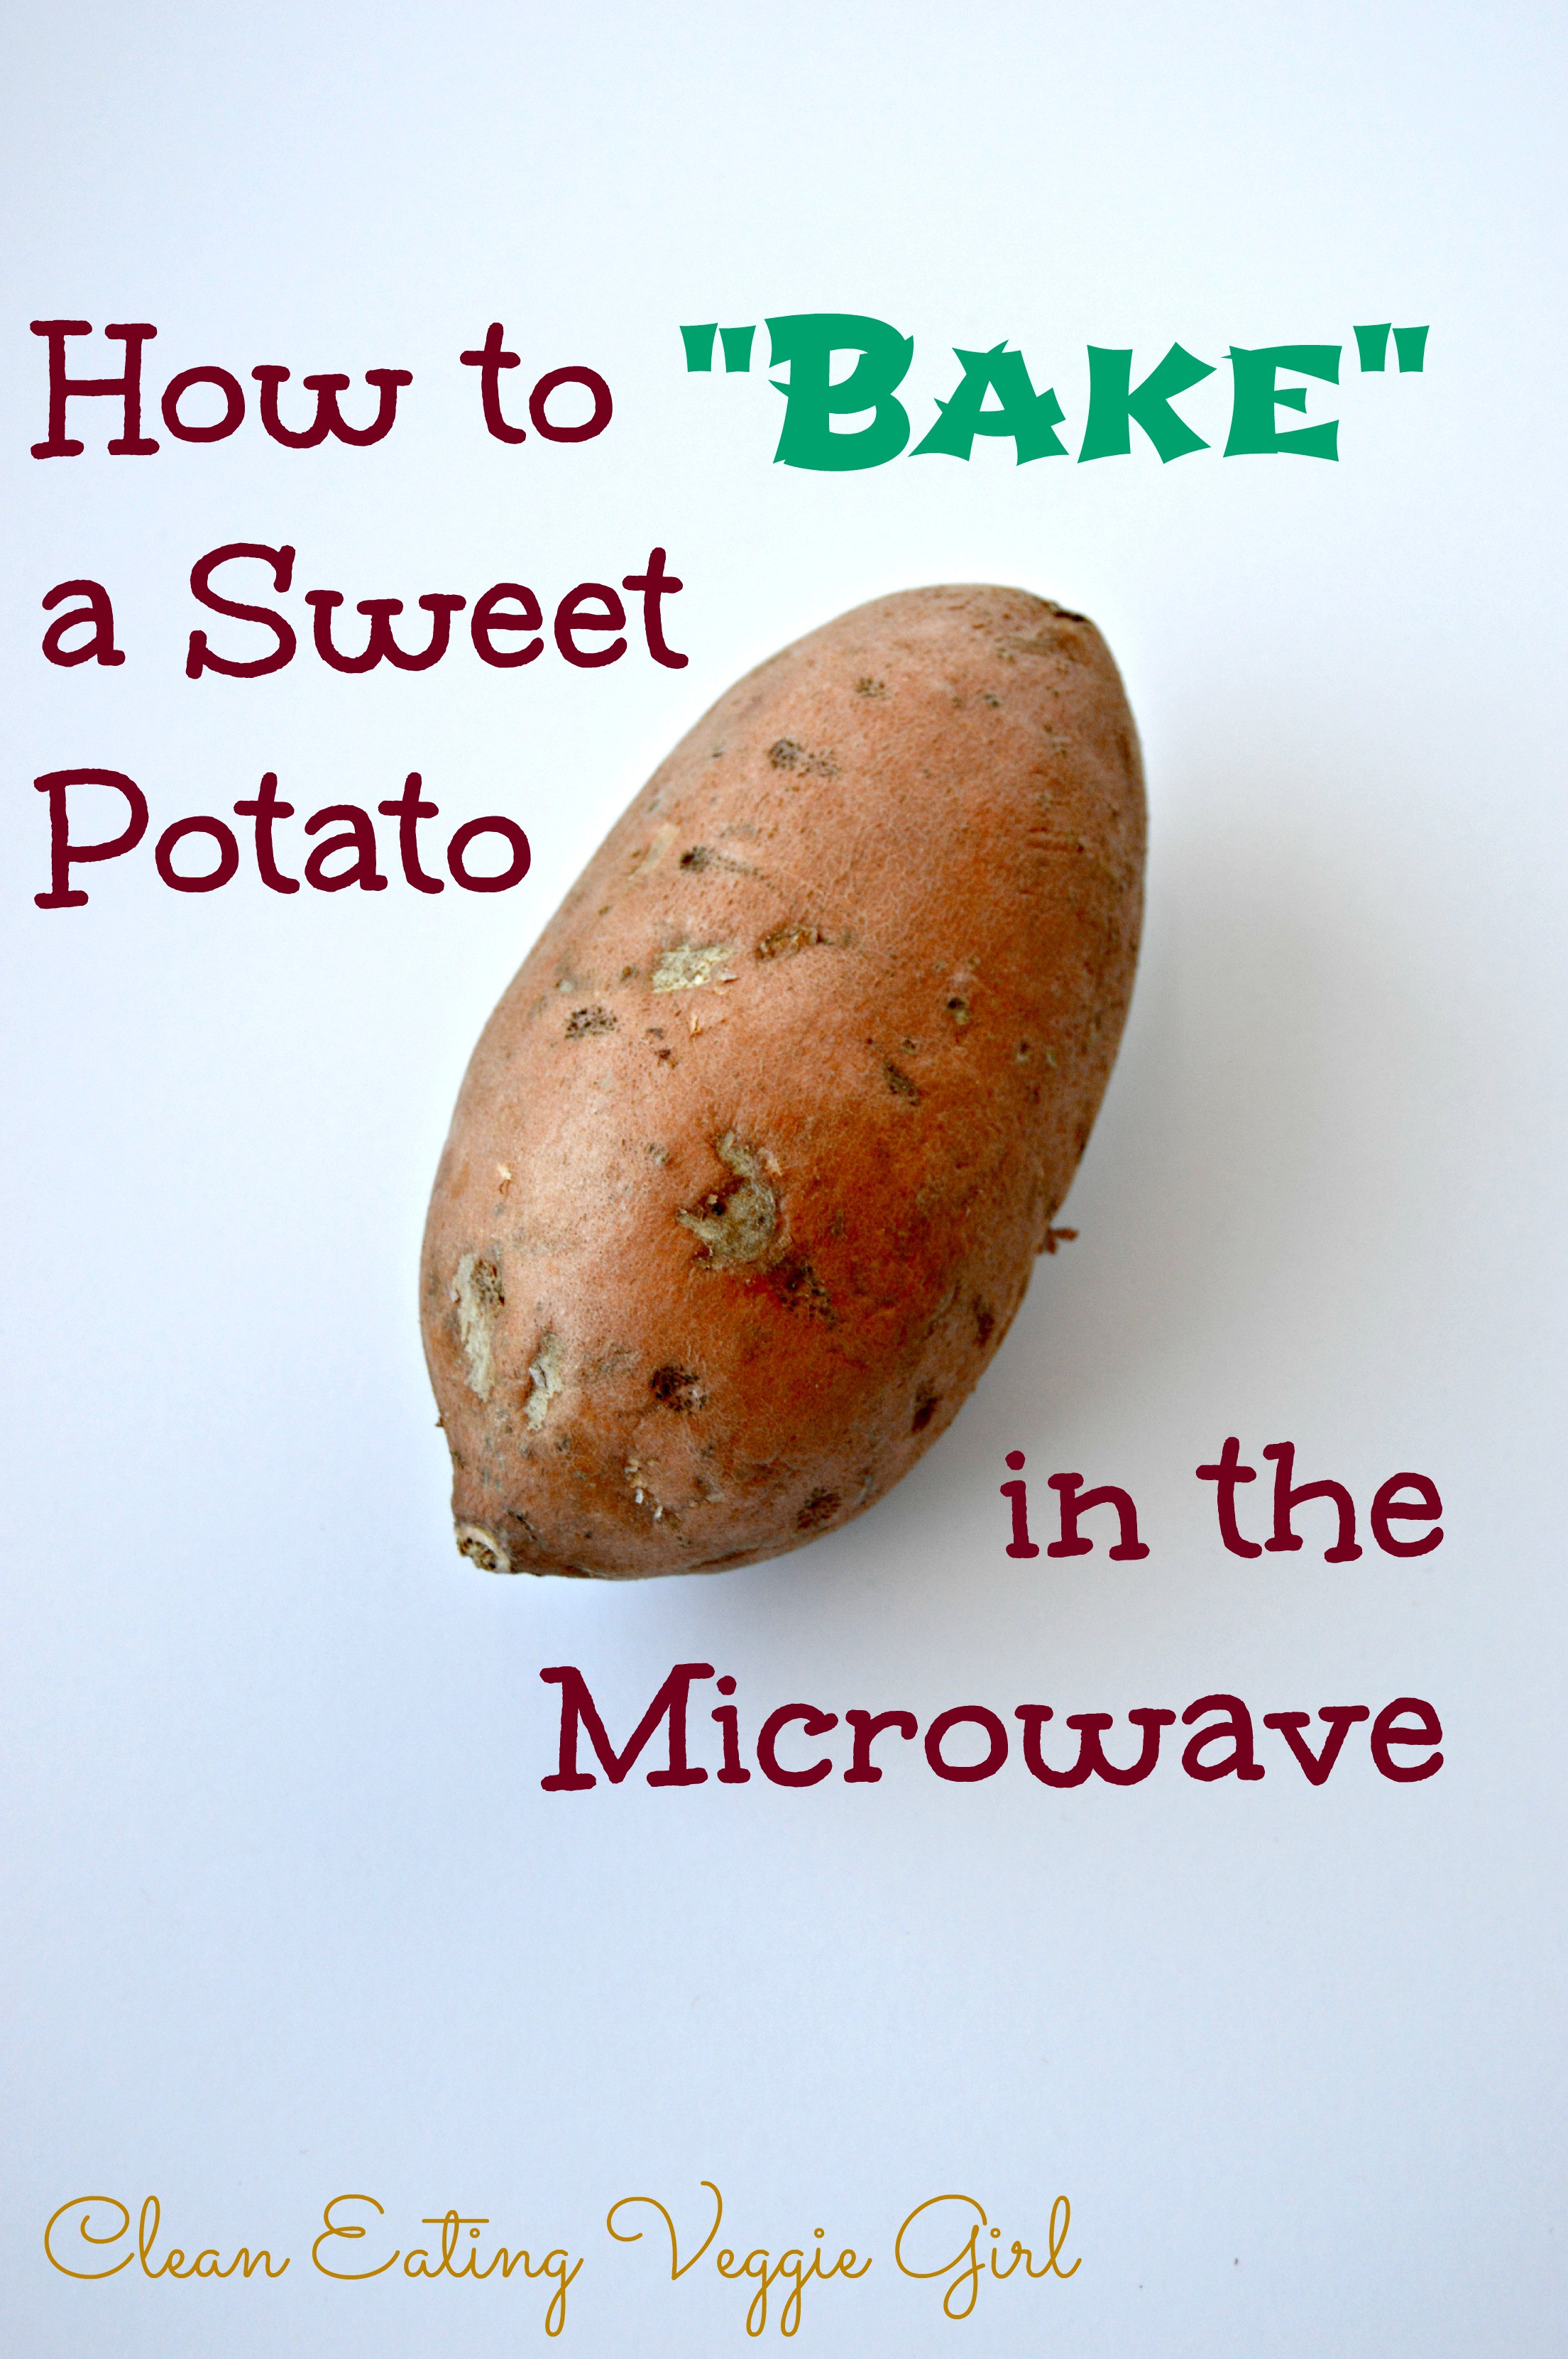 How To Microwave Sweet Potato
 How to Make a Baked Sweet Potato in the Microwave Clean